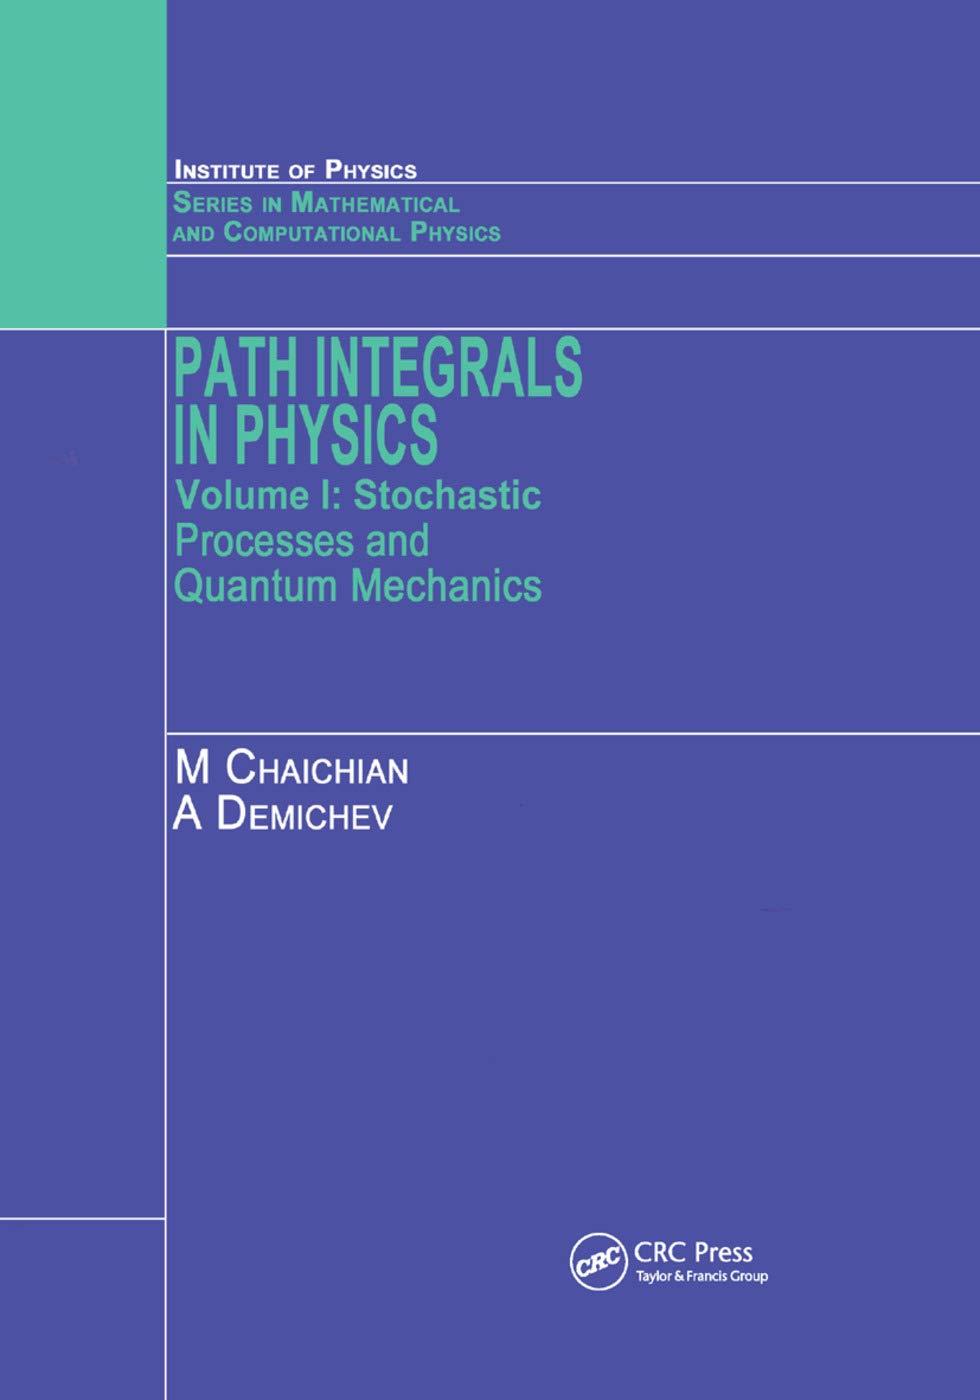 path integrals in physics volume i stochastic processes and quantum mechanics 1st edition m chaichian, a